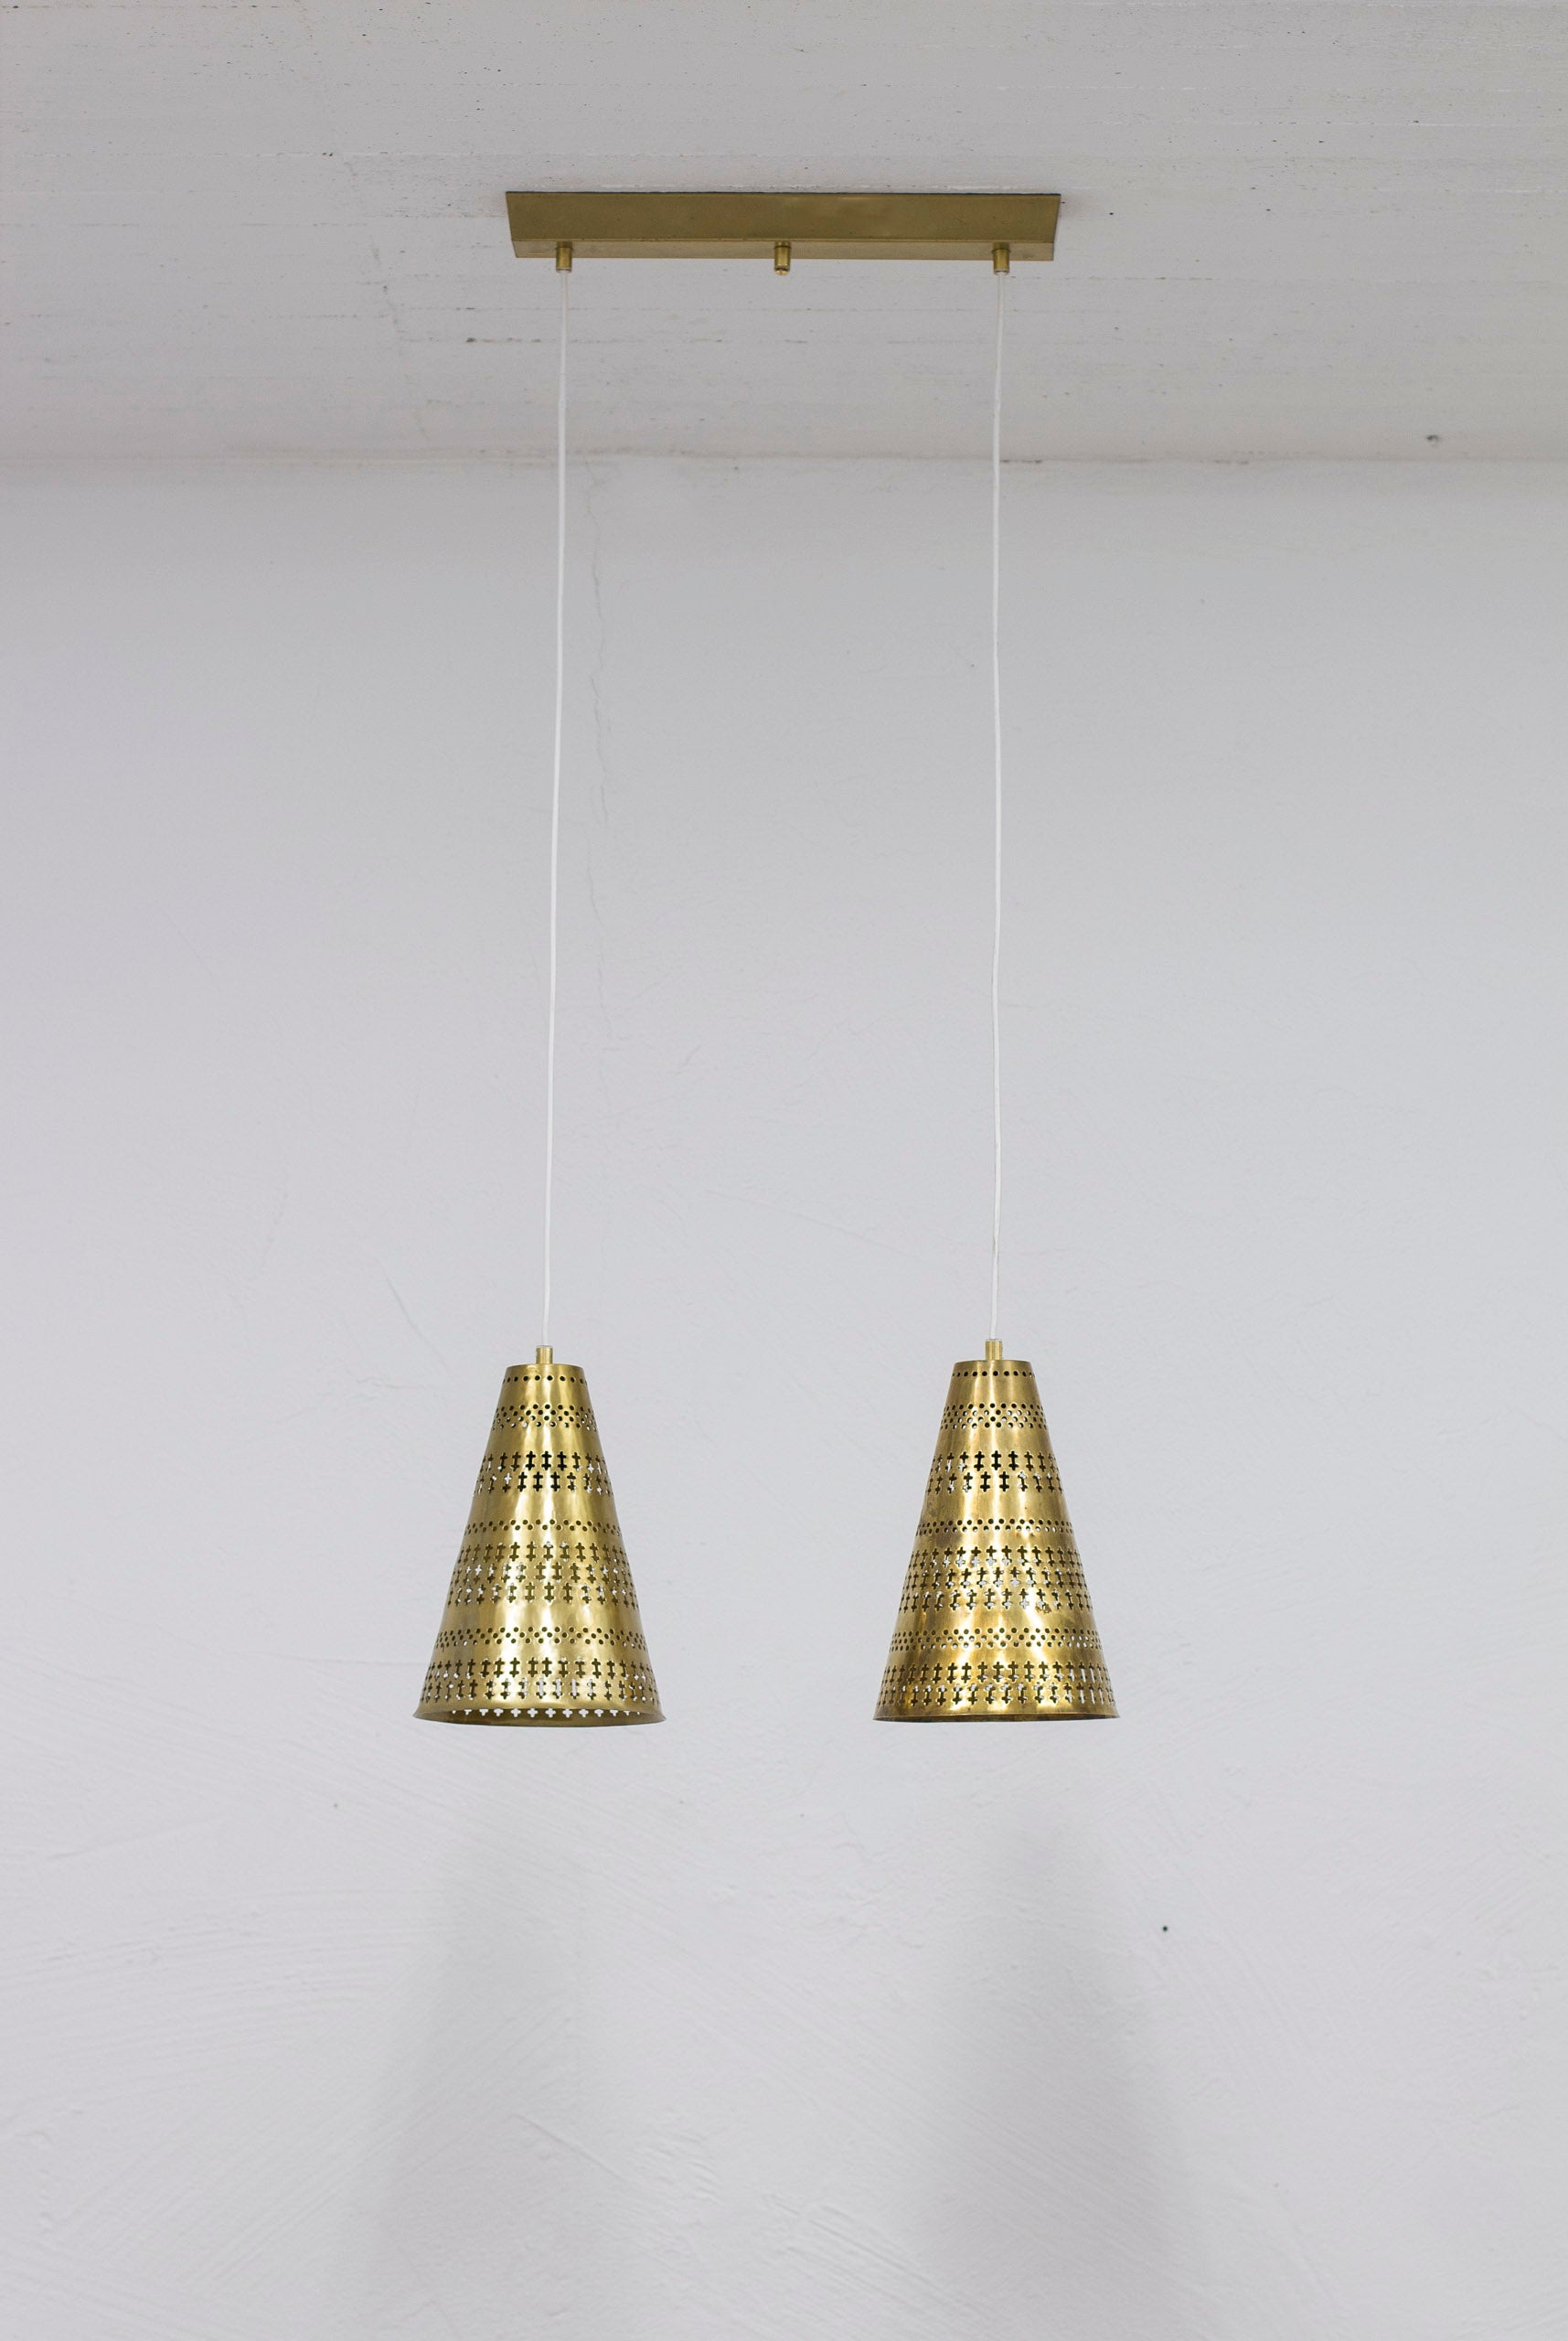 Ceiling lamp model 70 by Hans Bergström